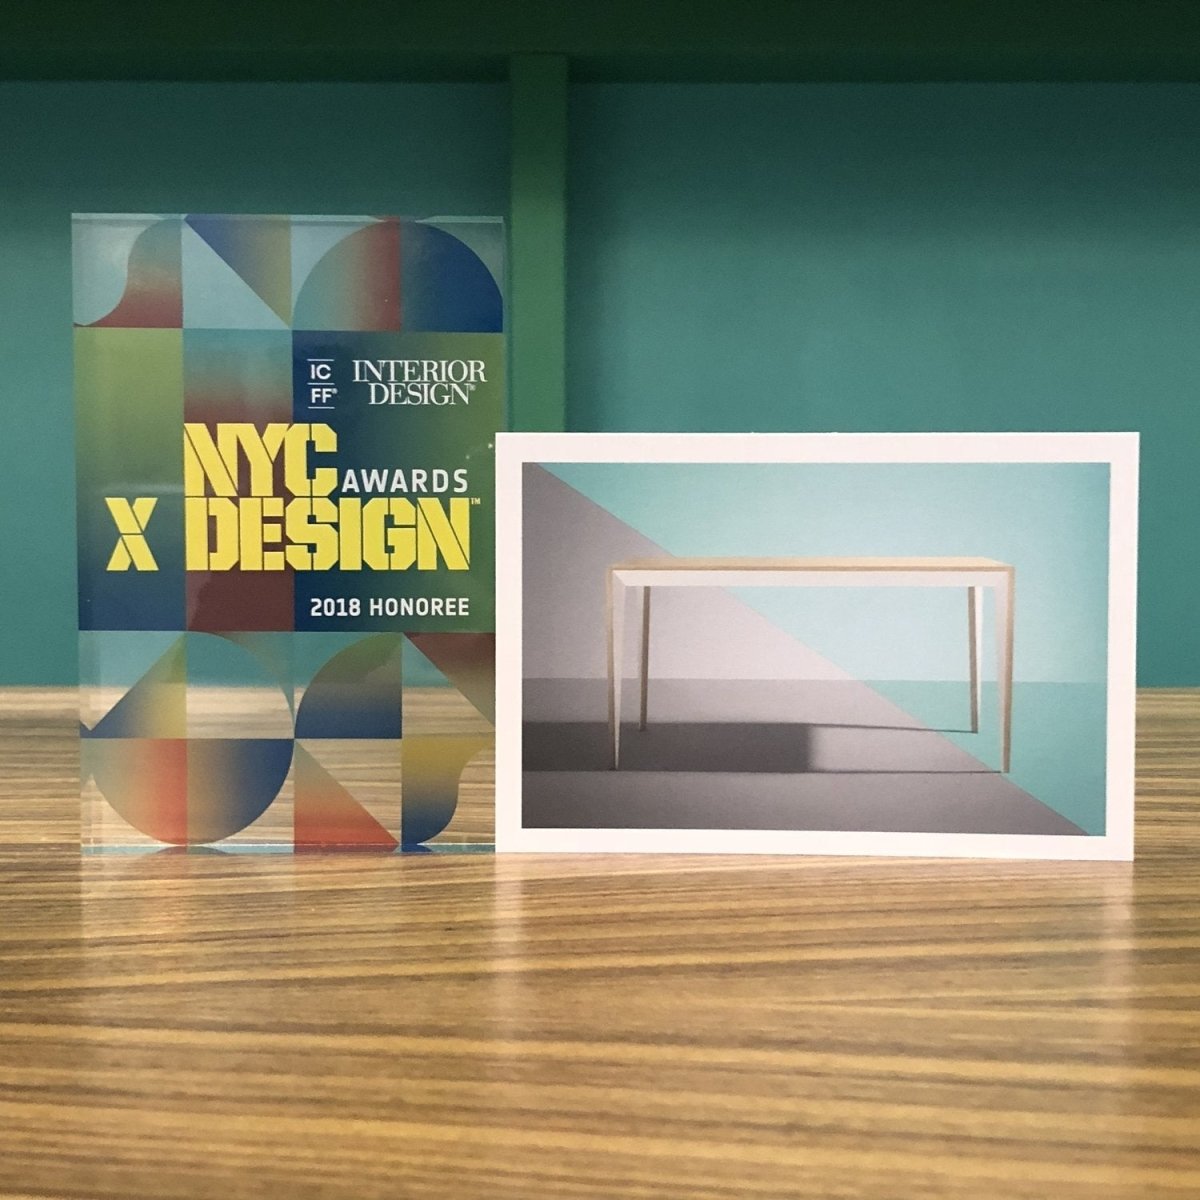 NYCxDesign 2018 Honoree - miduny